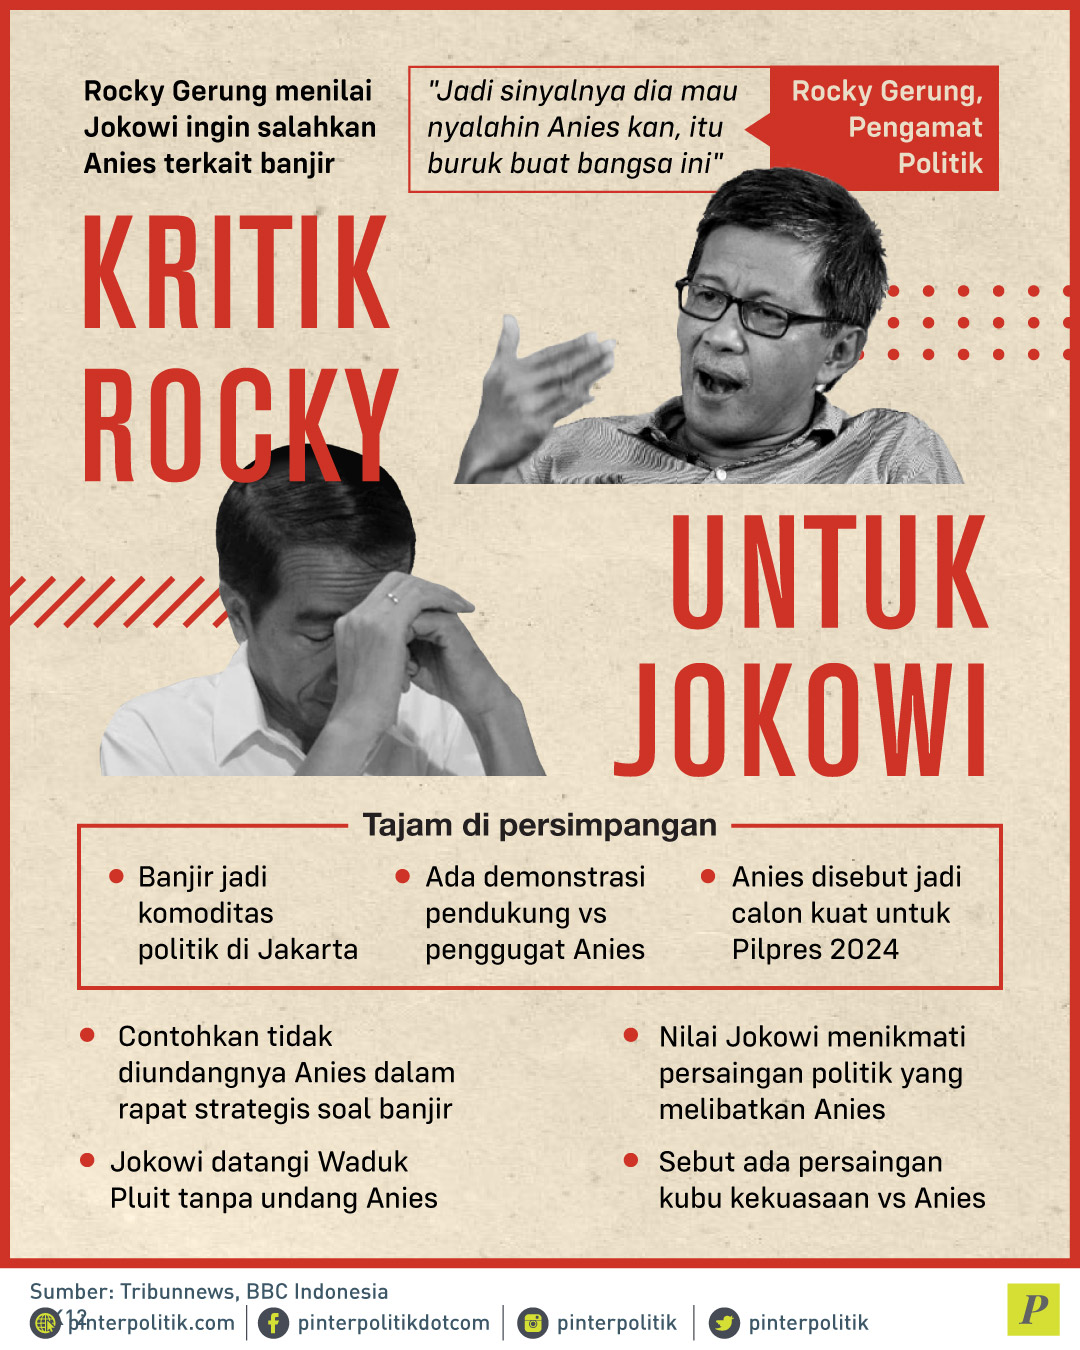 Rocky Gerung menilai Jokowi salahkan Anies terkait banjir